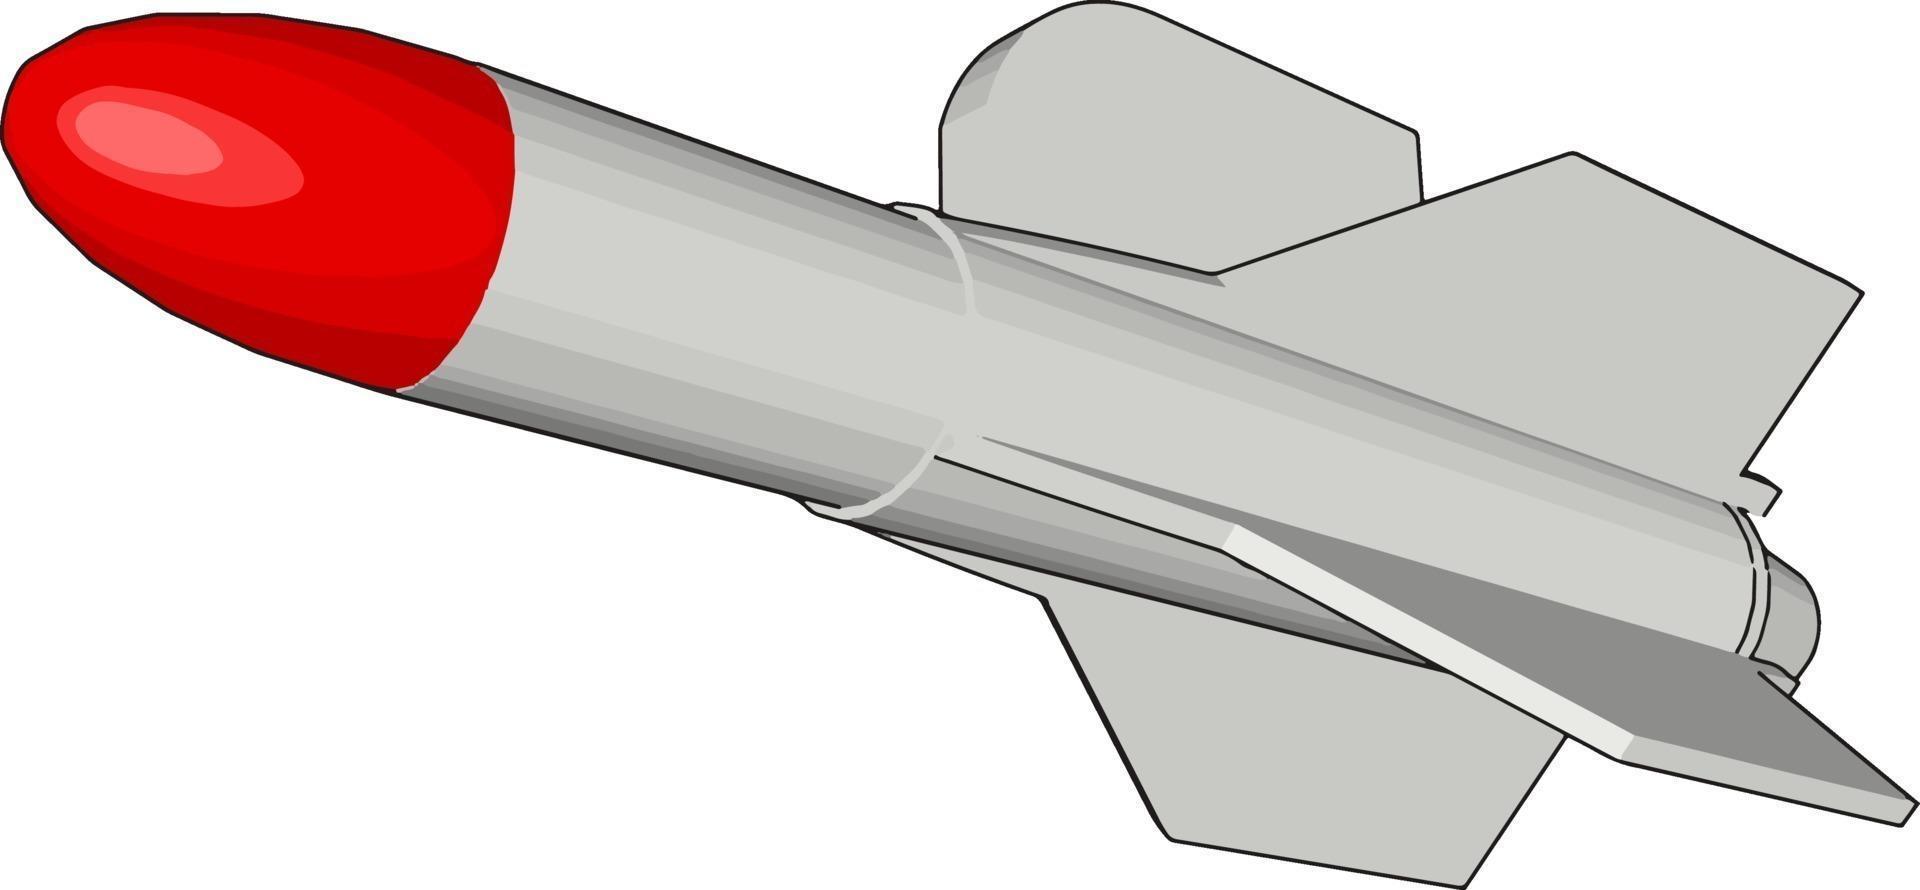 Rocket, illustration, vector on white background.